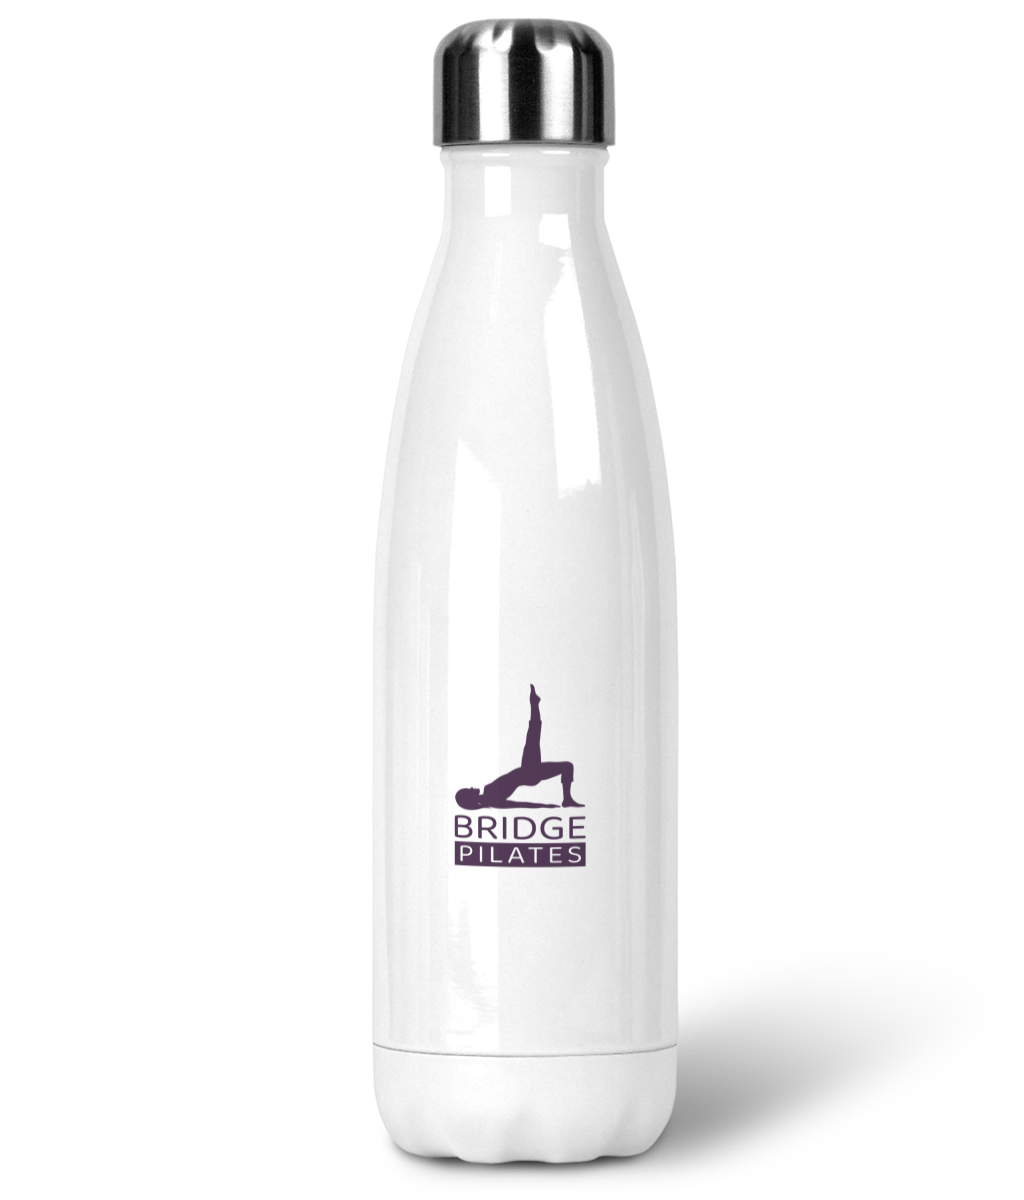 Bridge Pilates Premium Stainless Steel Water Bottle - mockup 1